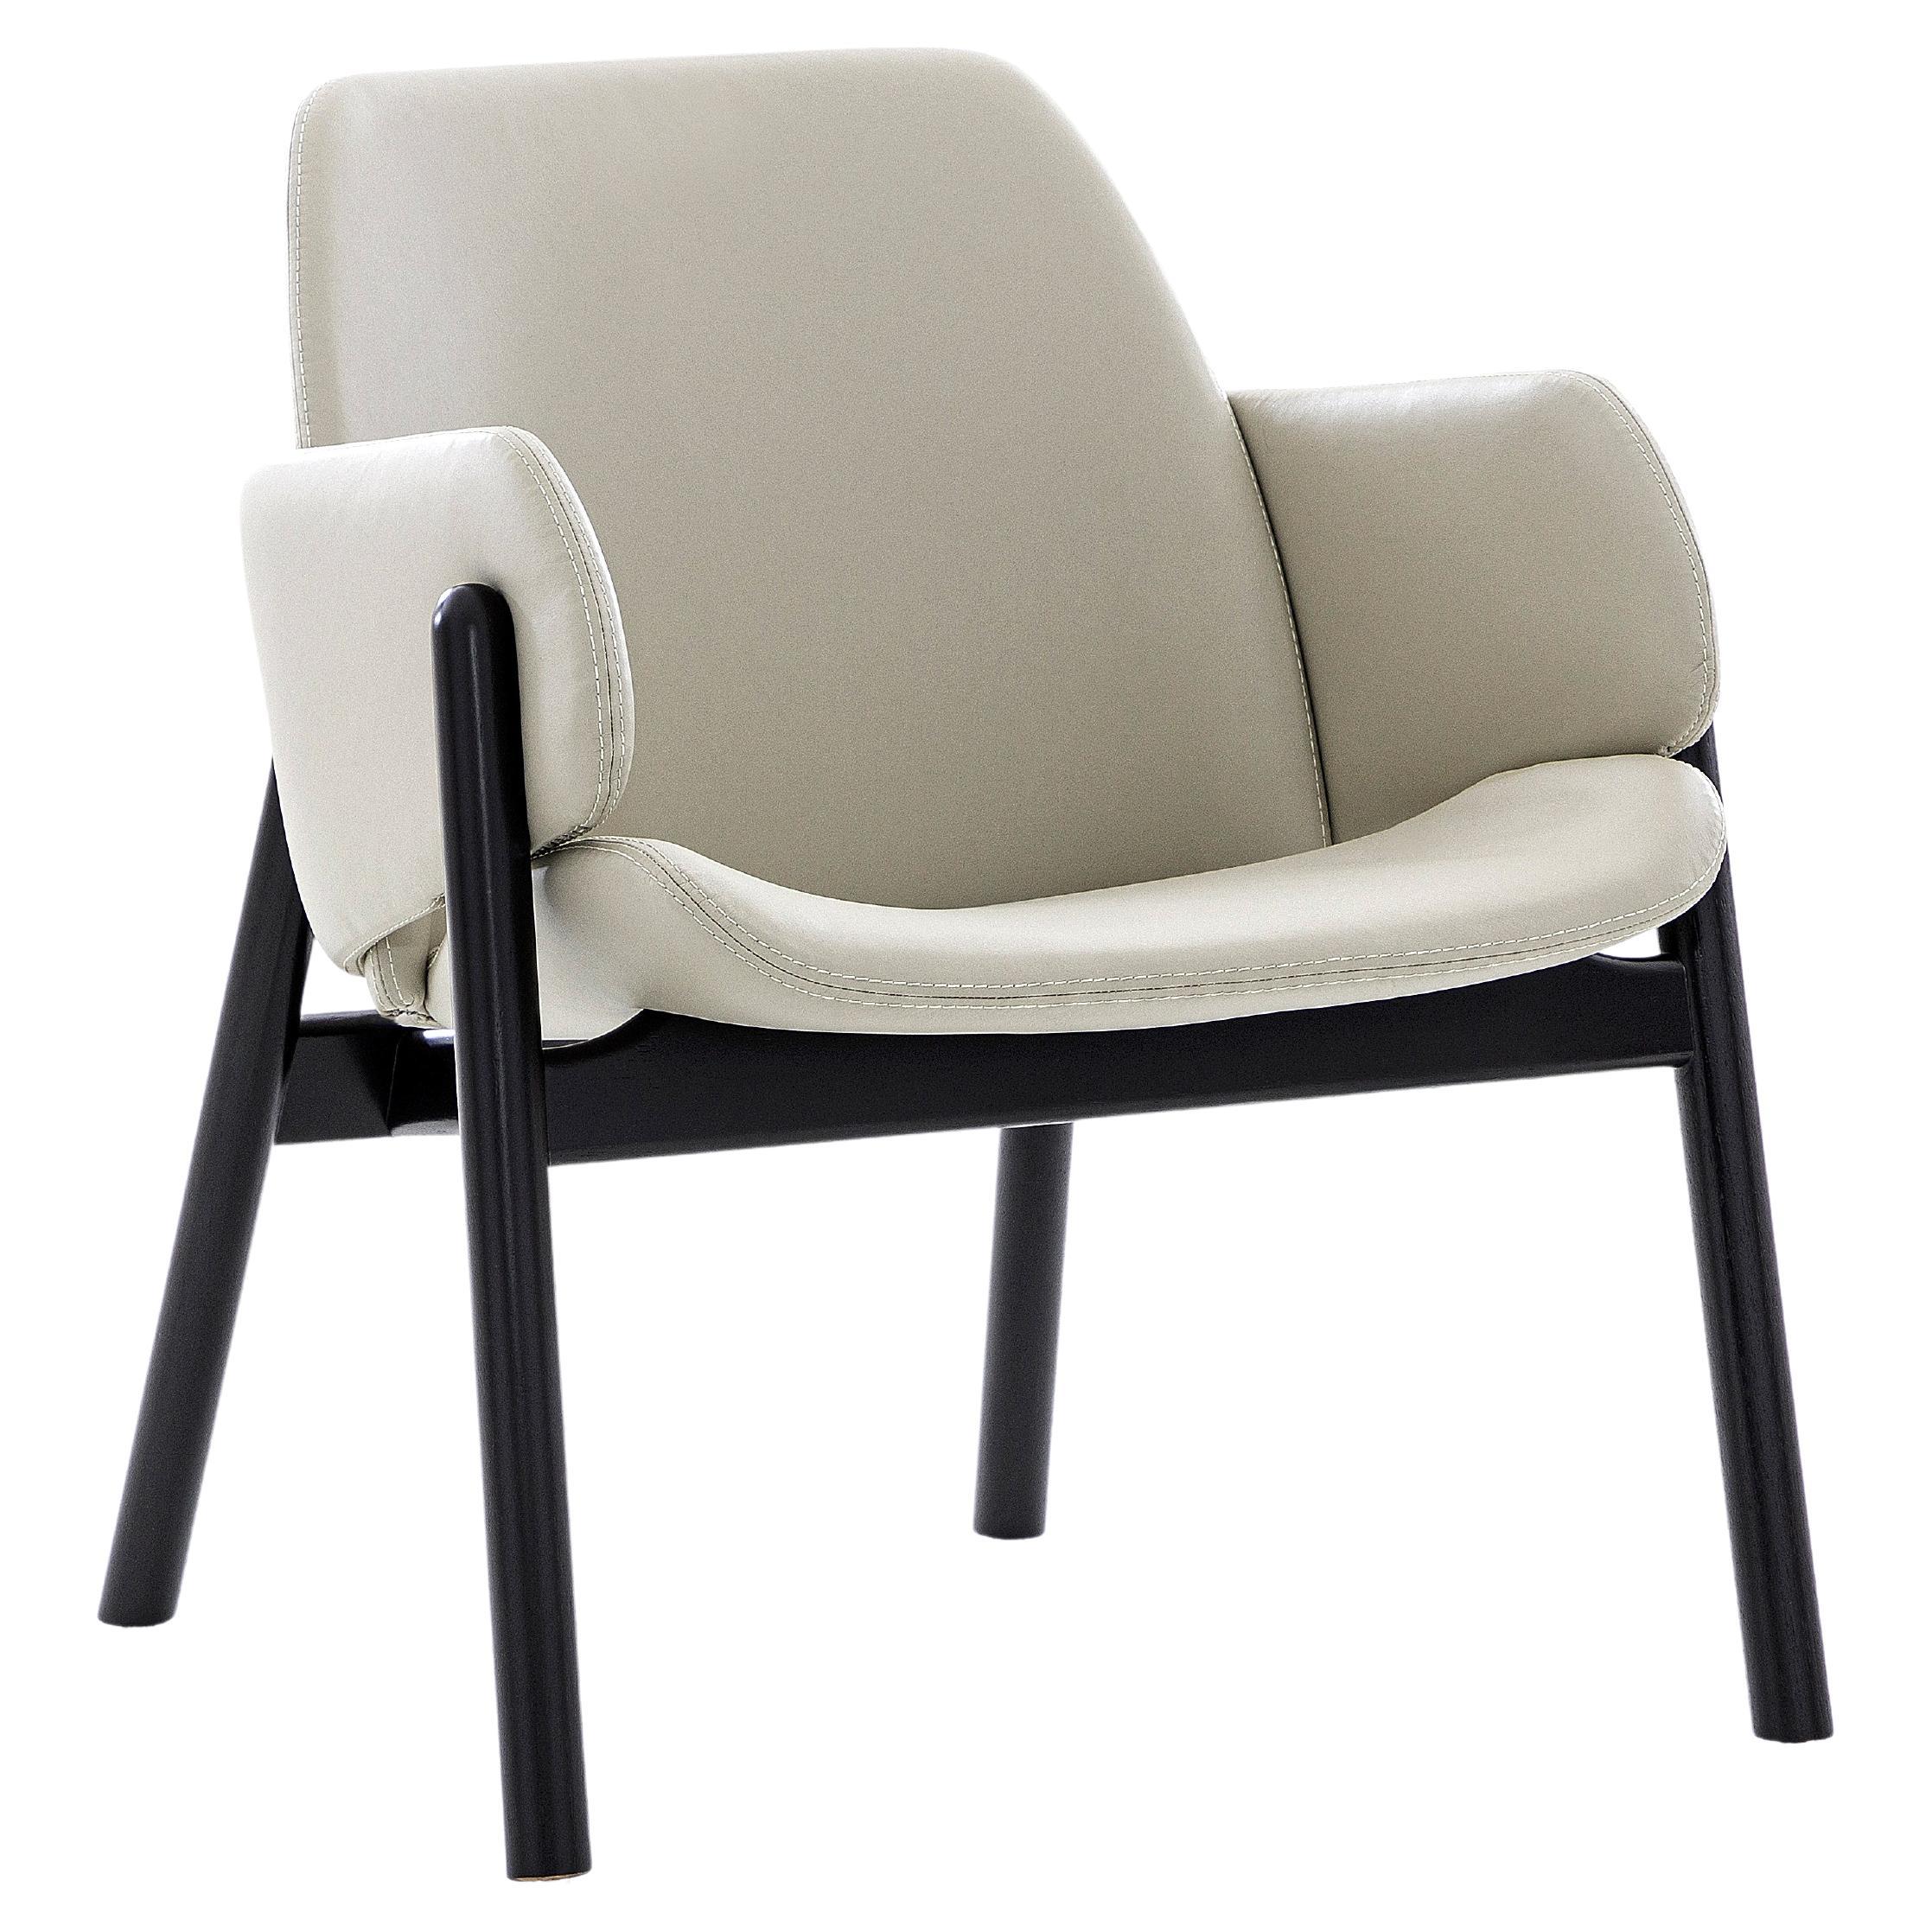 Oben-Stuhl aus cremefarbenem Leder und schwarz lackiertem Rahmen